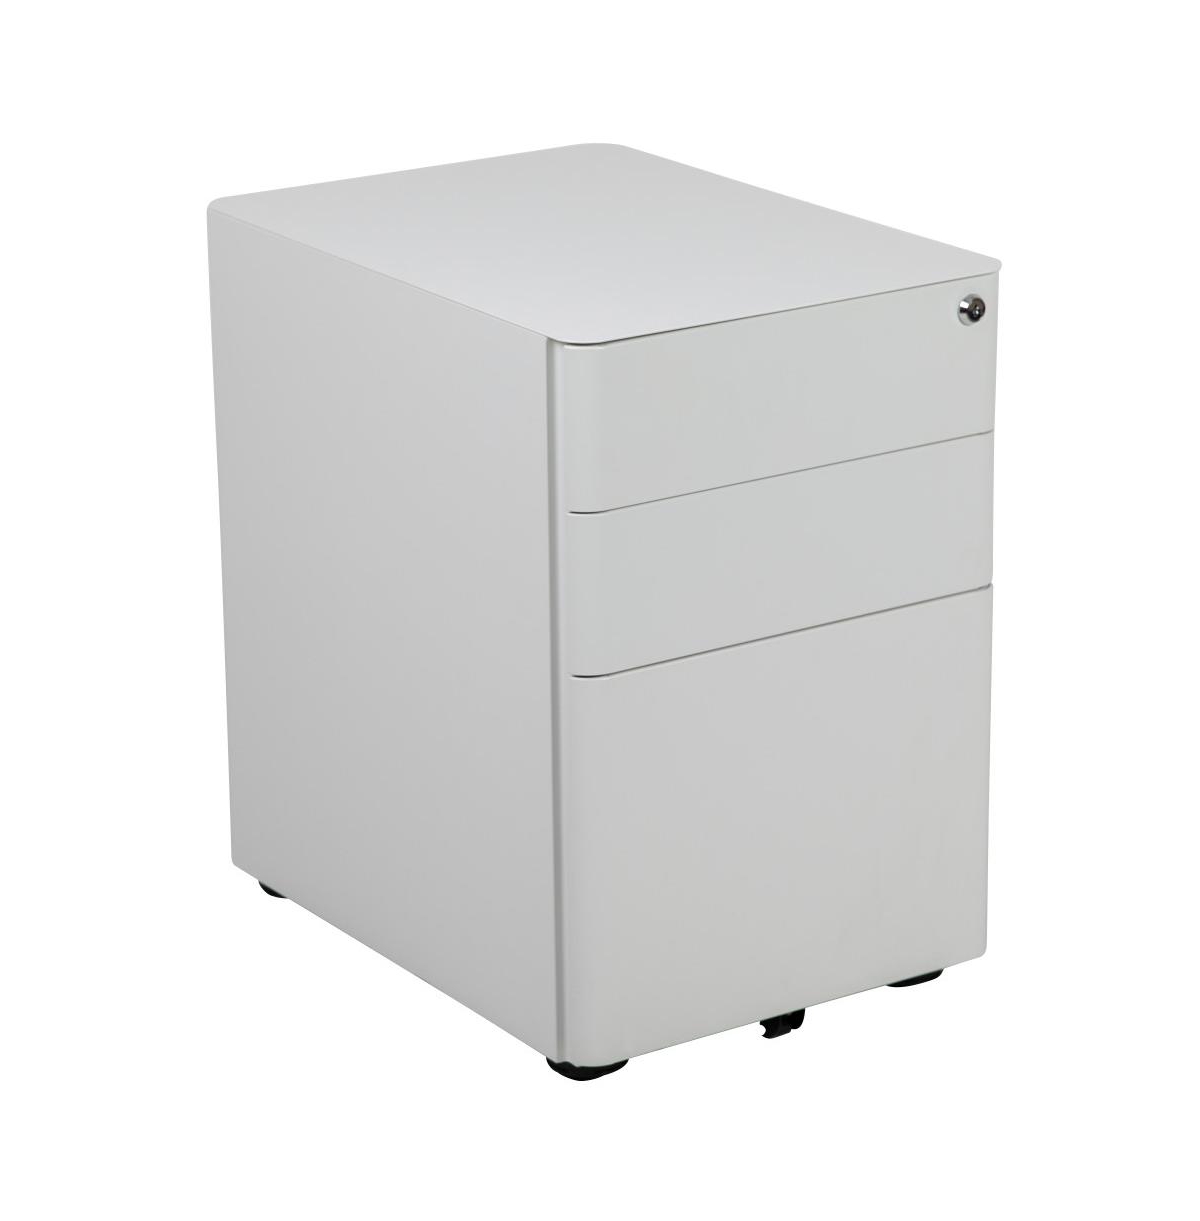 Emma+oliver Modern 3-drawer Mobile Locking Filing Cabinet Storage Organizer In White